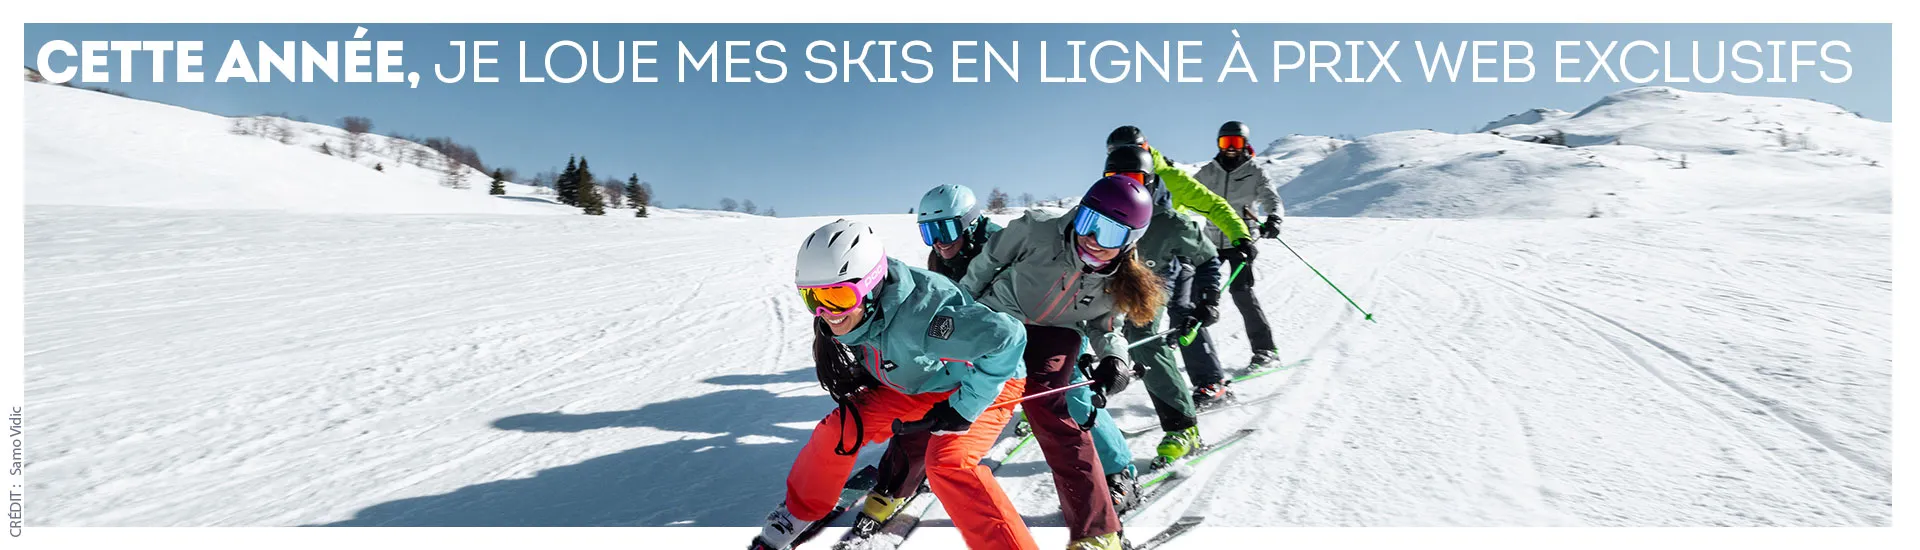 Sacs de Ski - St Pierre Sports de Sorel